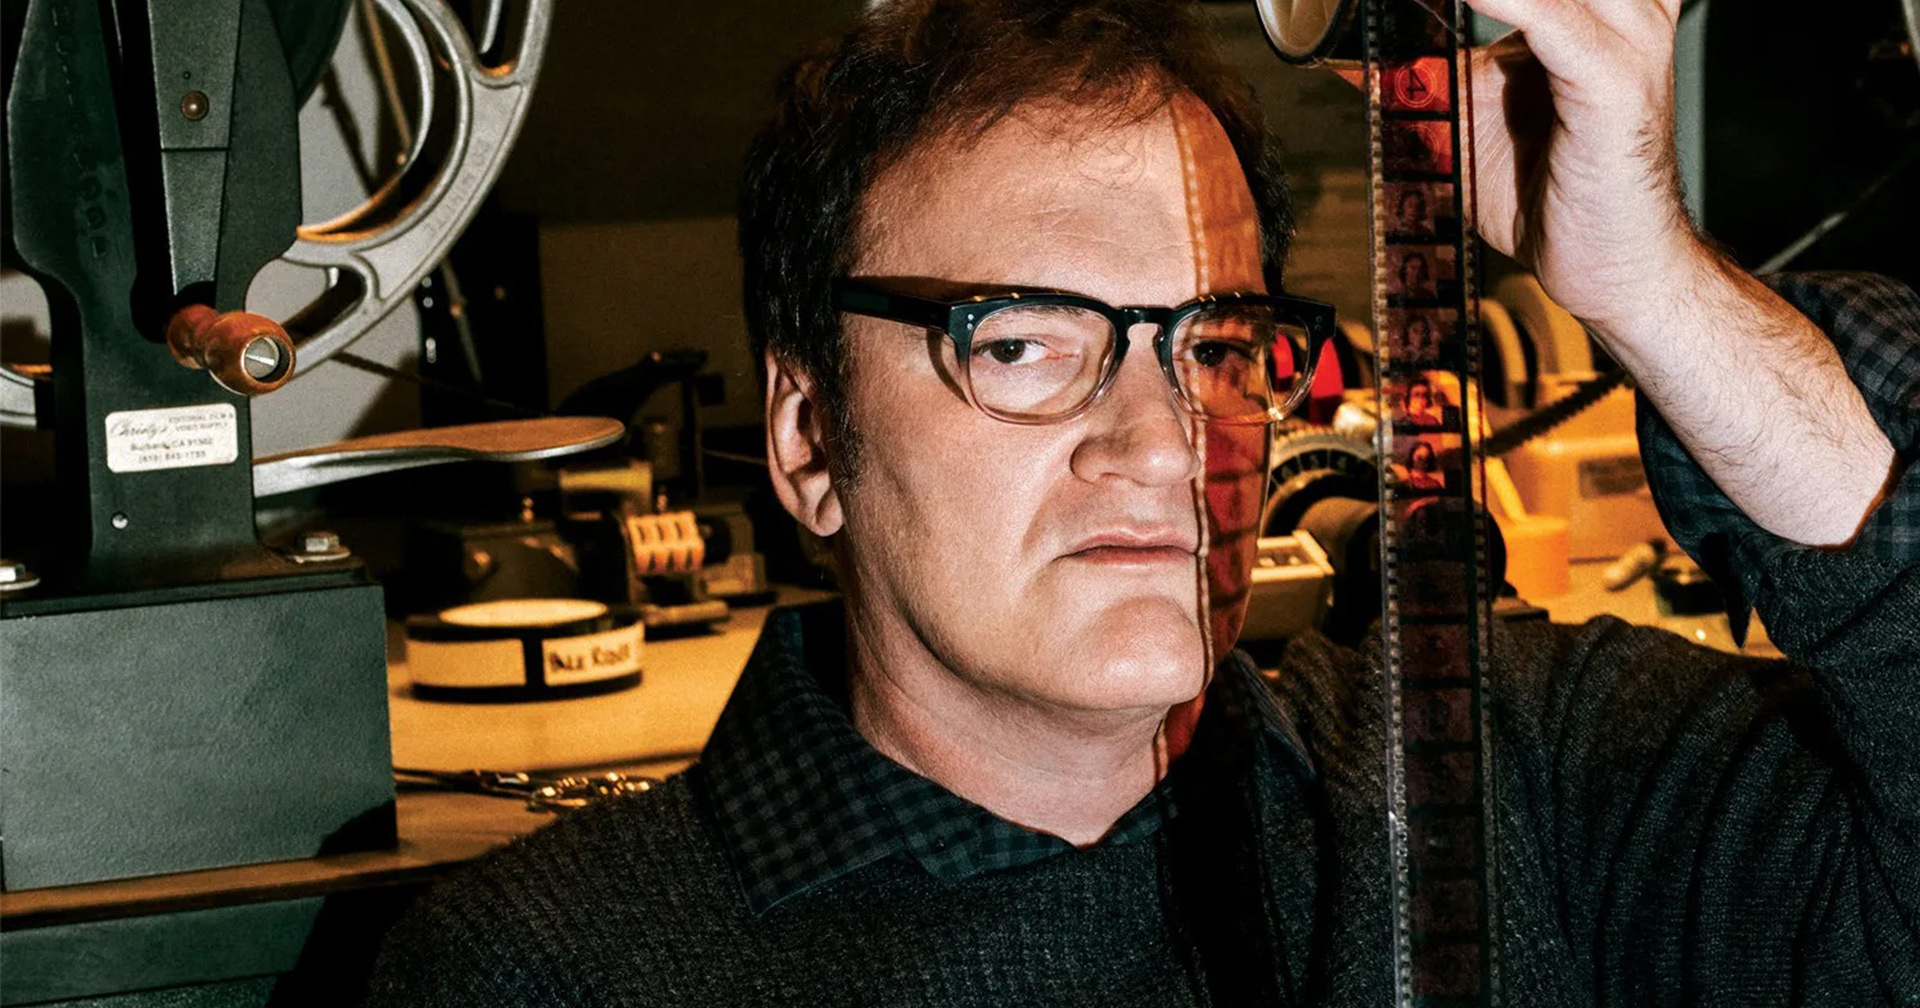 Quentin Tarantino วิจารณ์วงการหนังยุคปัจจุบันว่าเป็น ‘ยุคที่เลวร้ายที่สุดในประวัติศาสตร์’